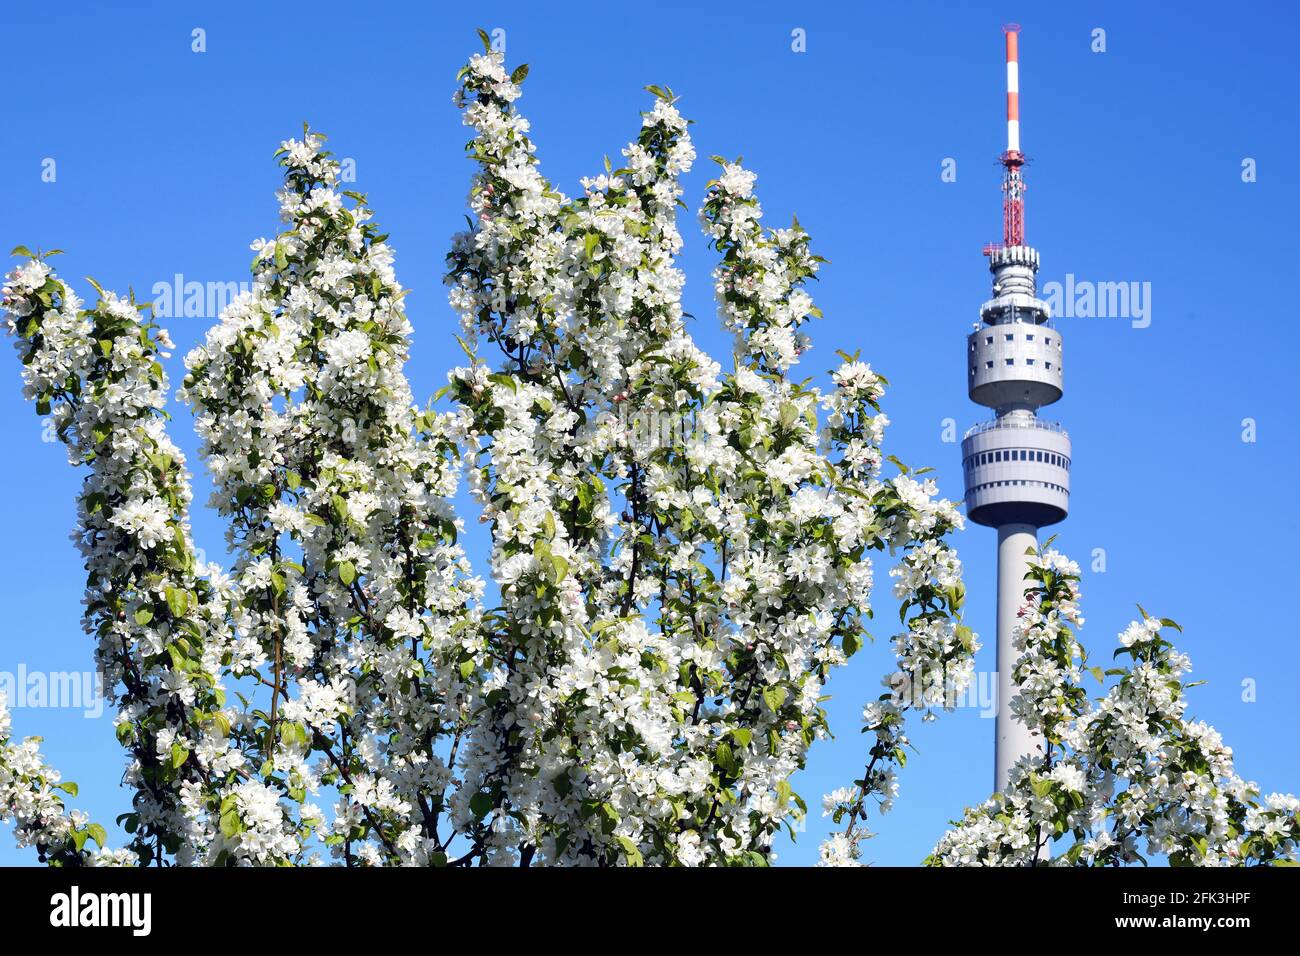 Primavera nel Parco Westfalen di Dortmund, la torre televisiva di Florianturm dietro i rami di un albero di mele in fiore. --- Frühling im Dortmunder Westfalenpark, Fernsehturm Florianturm hinter den Zweigen eines blühenden Apfelbaums. Foto Stock